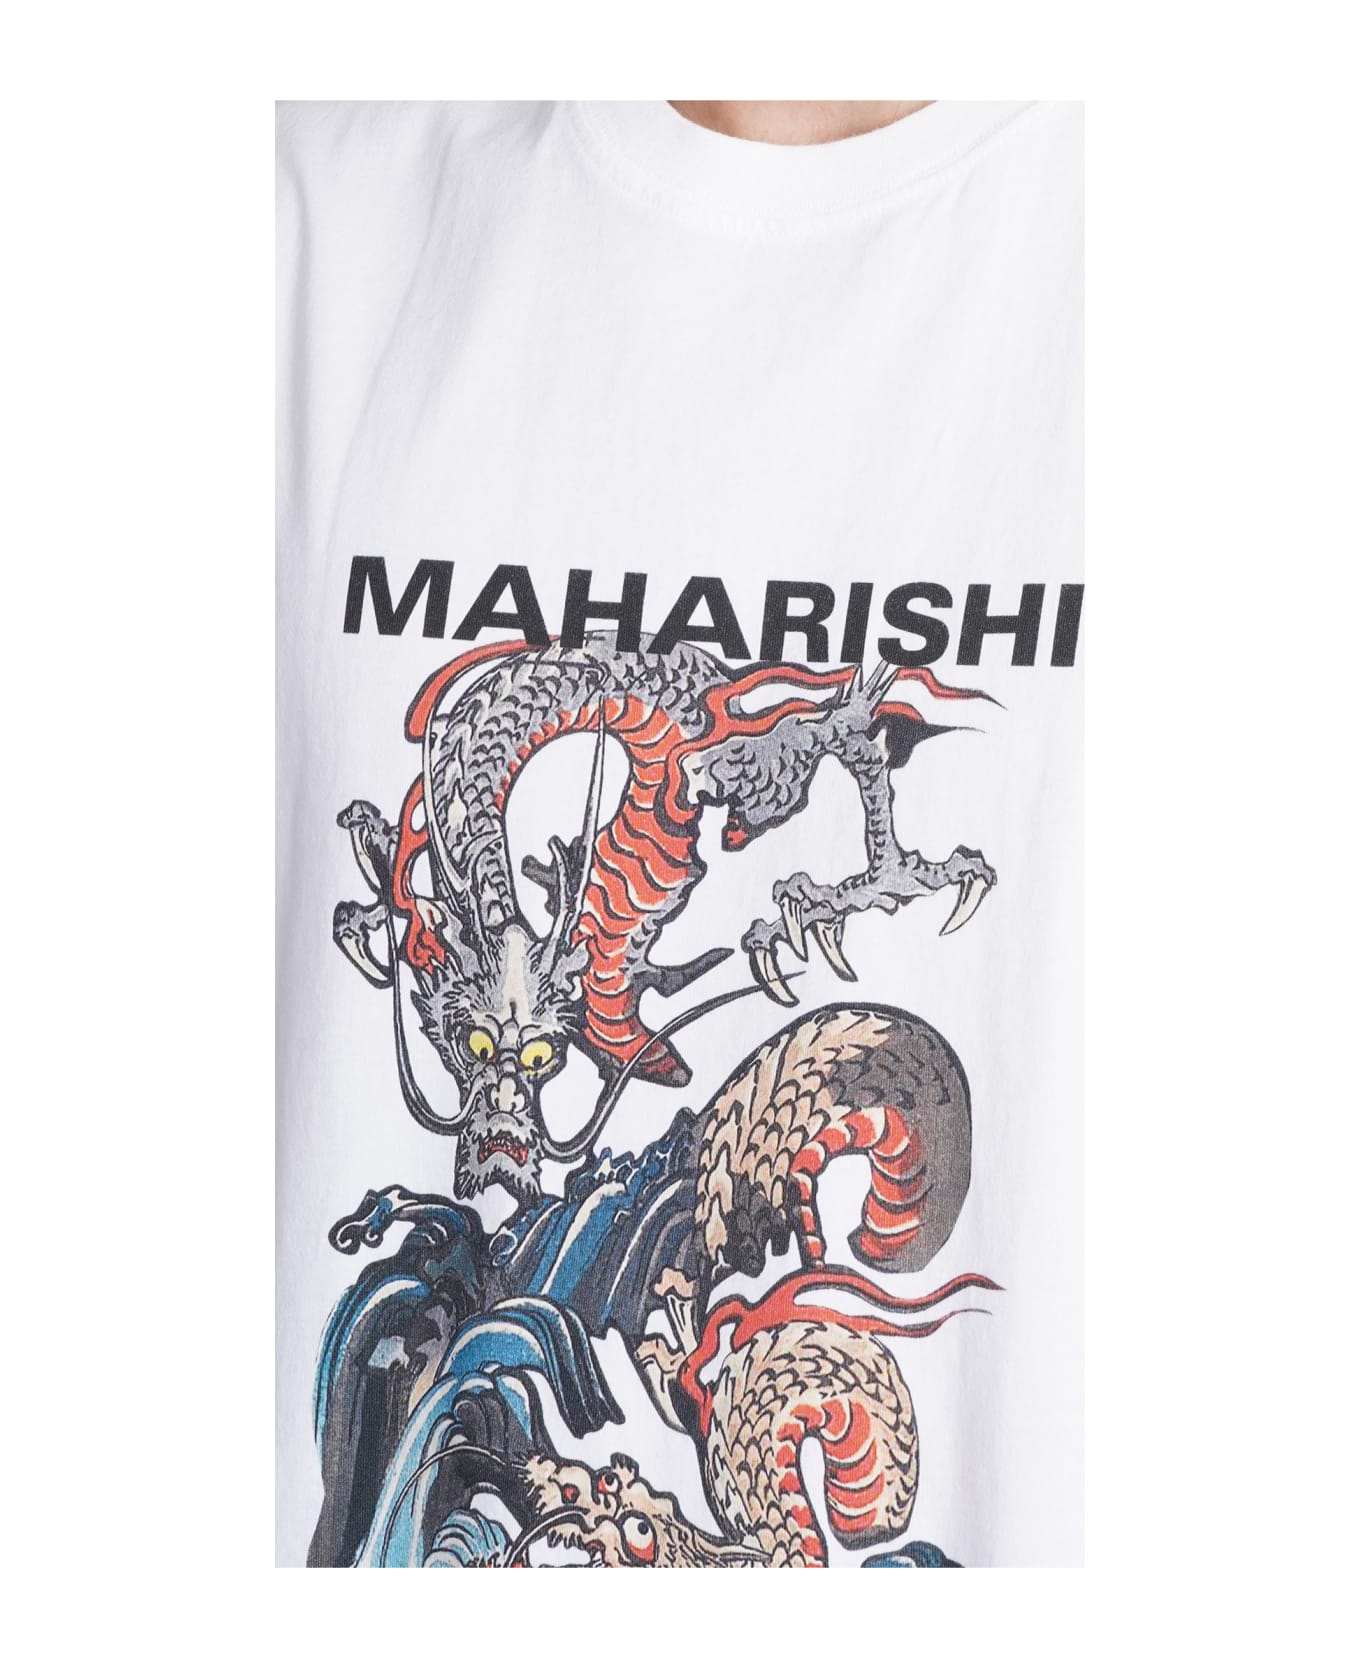 Maharishi T-shirt In White Cotton - white シャツ